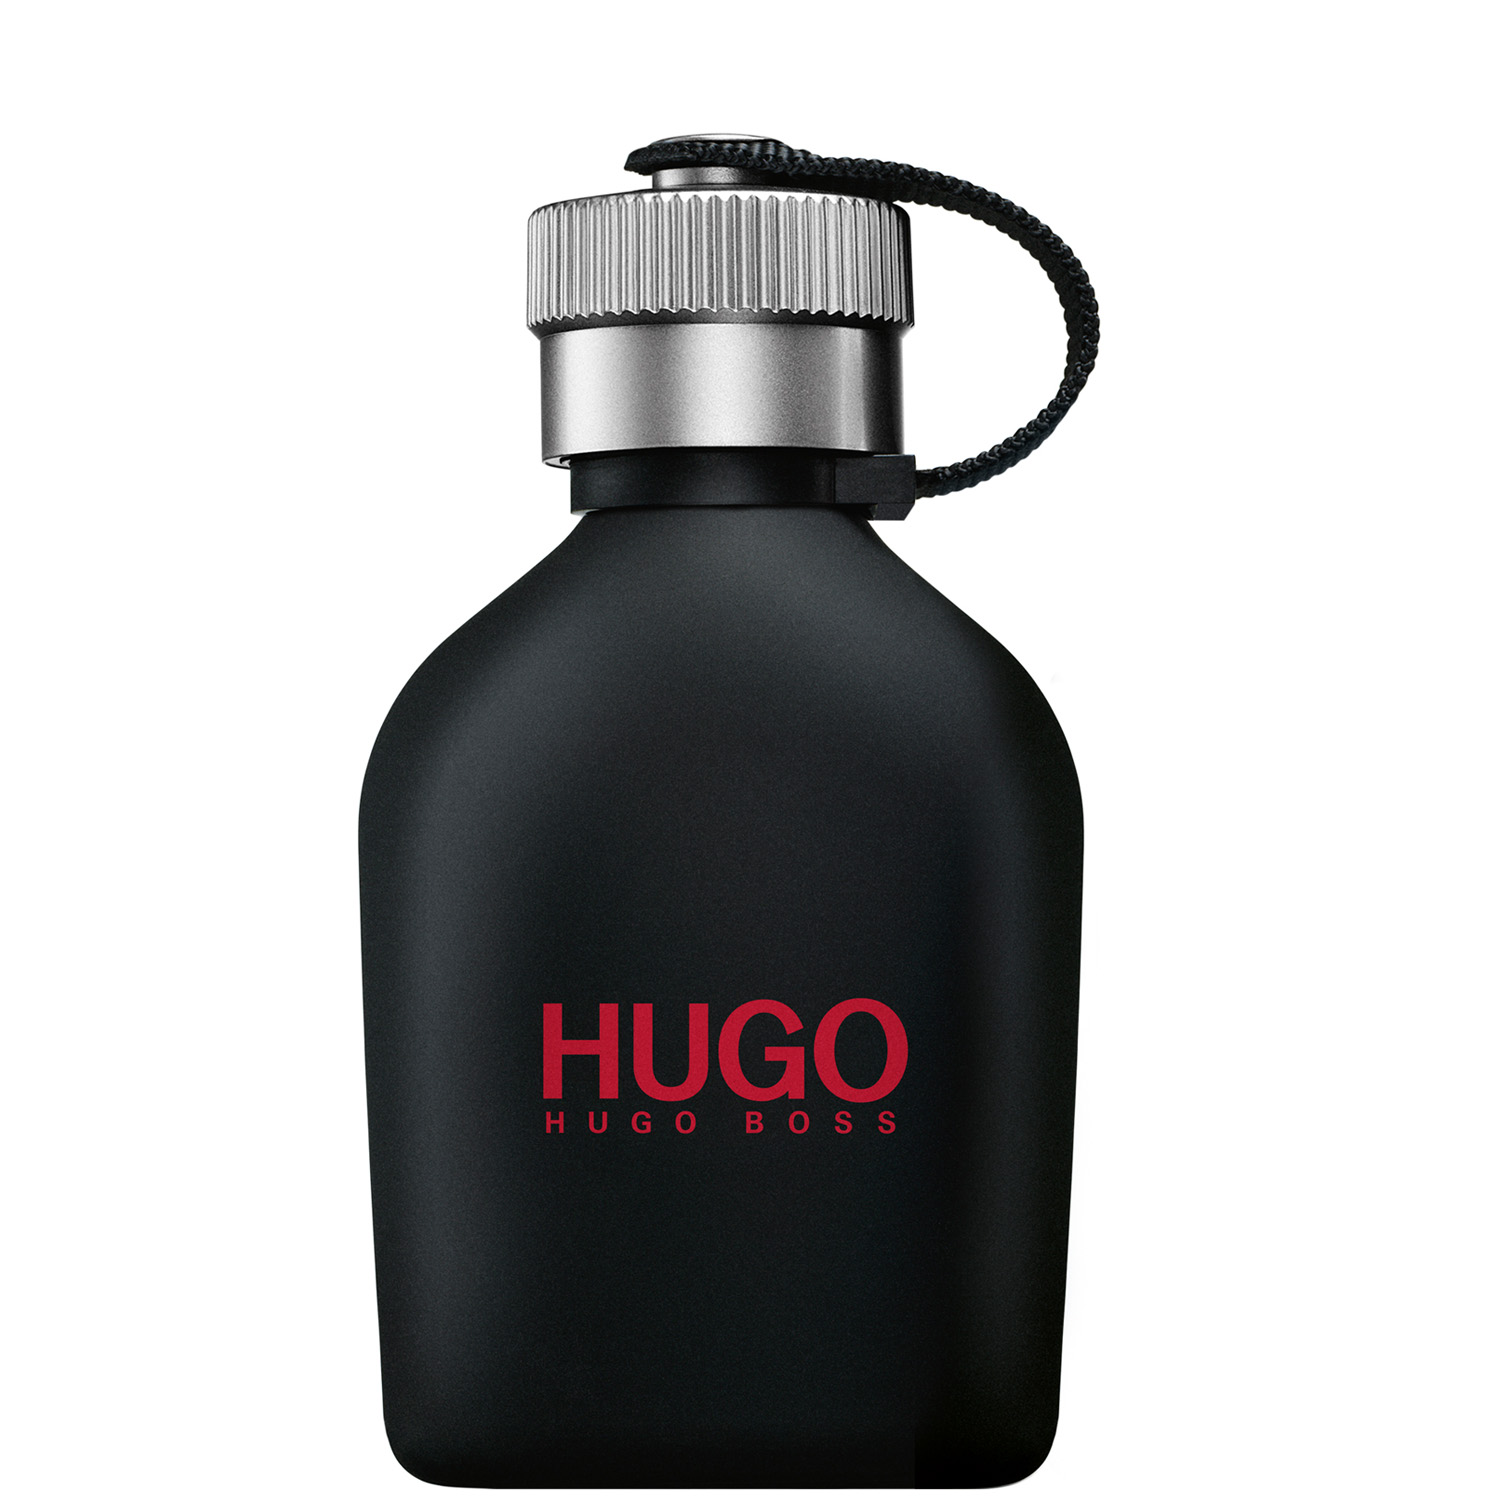 Hugo Boss Hugo Just Different Eau de Toilette 75ml